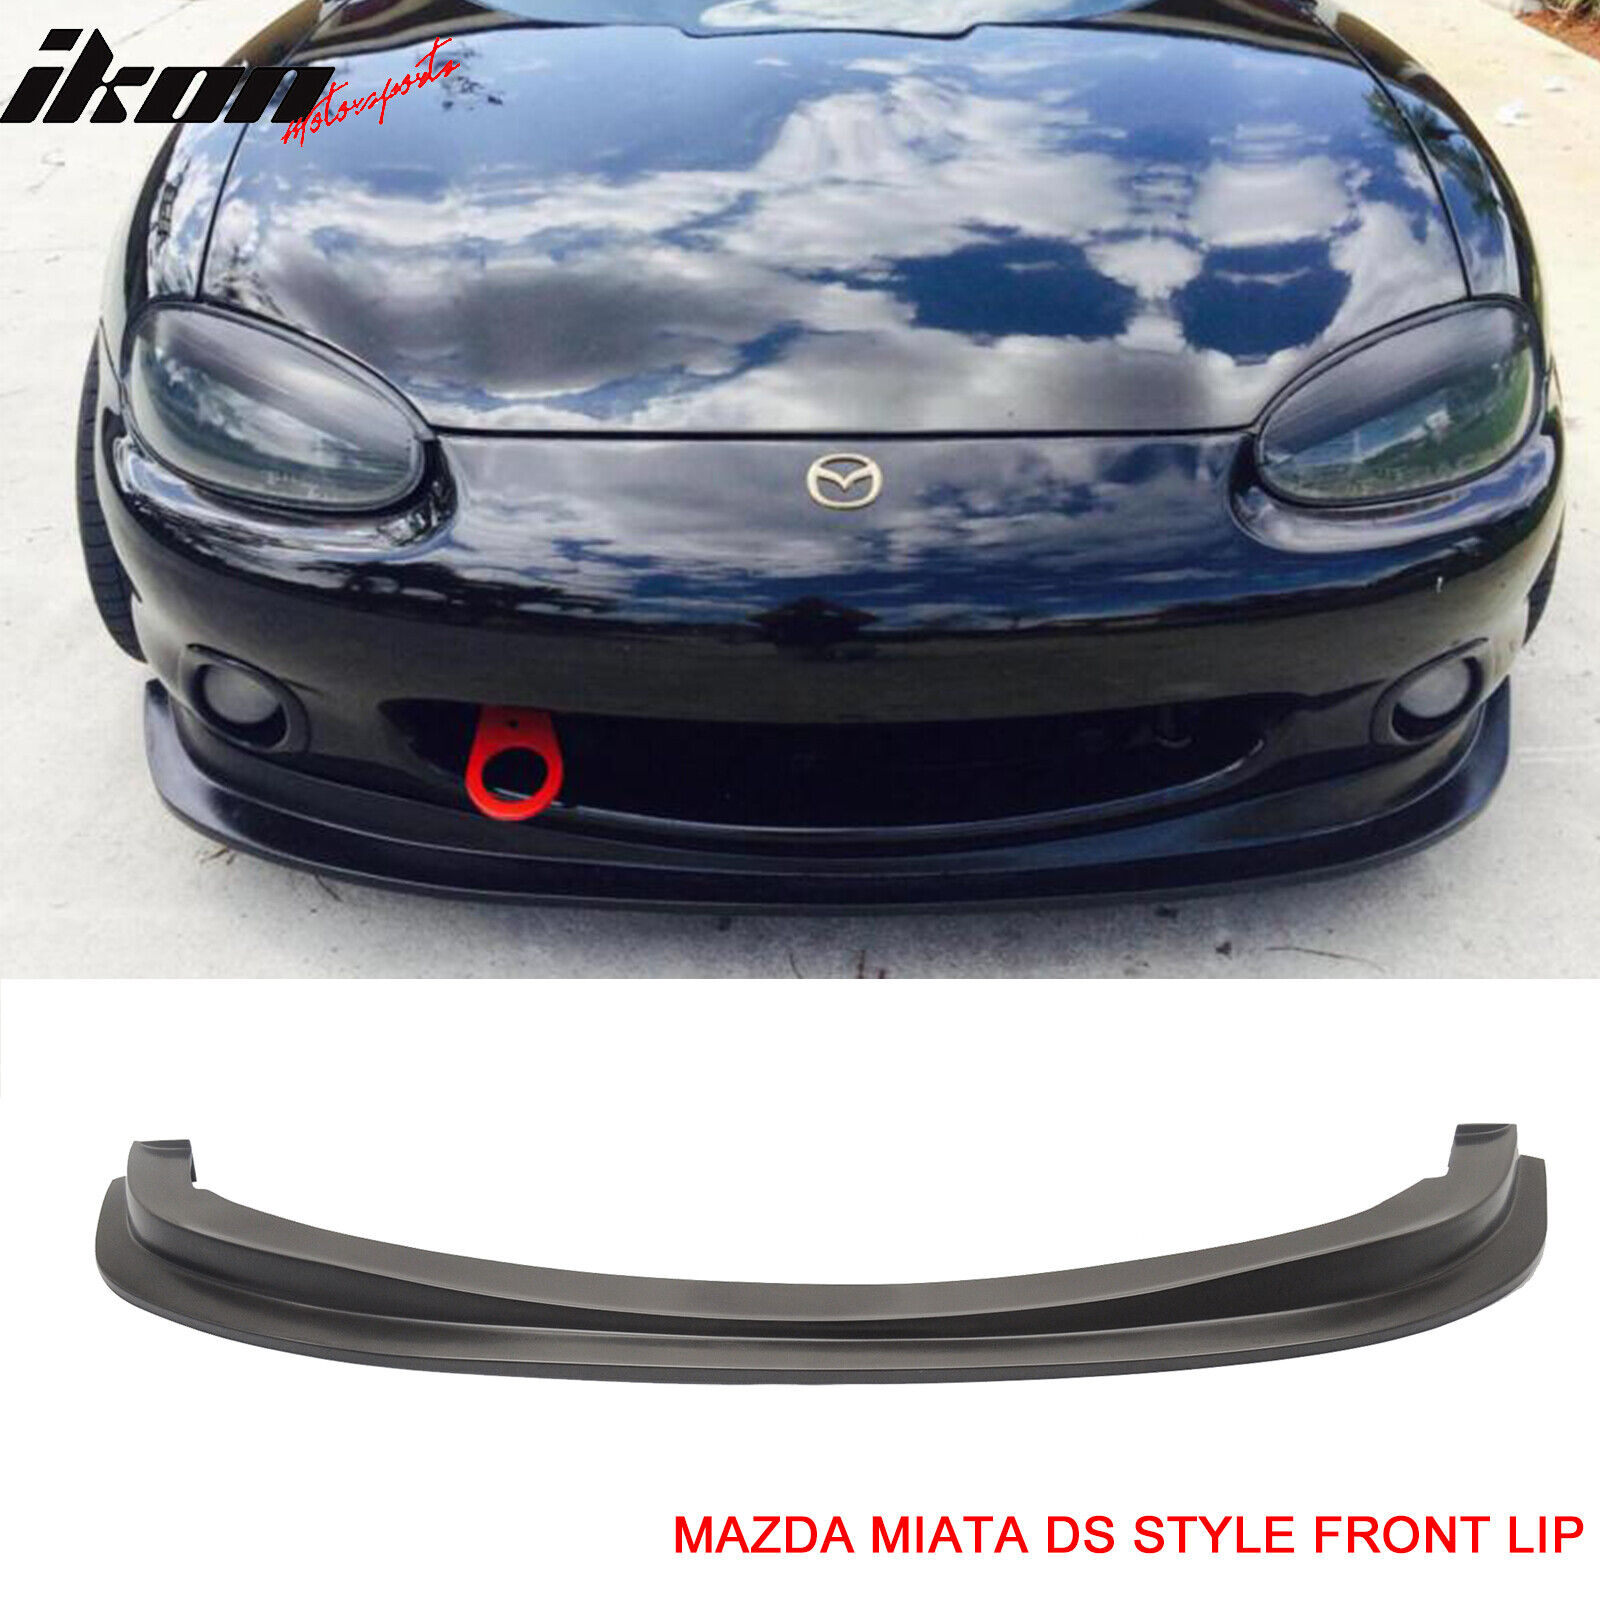 Fits 99-00 Mazda Miata MX-5 DS Style Front Bumper Lip PU Spoiler Splitter Kit